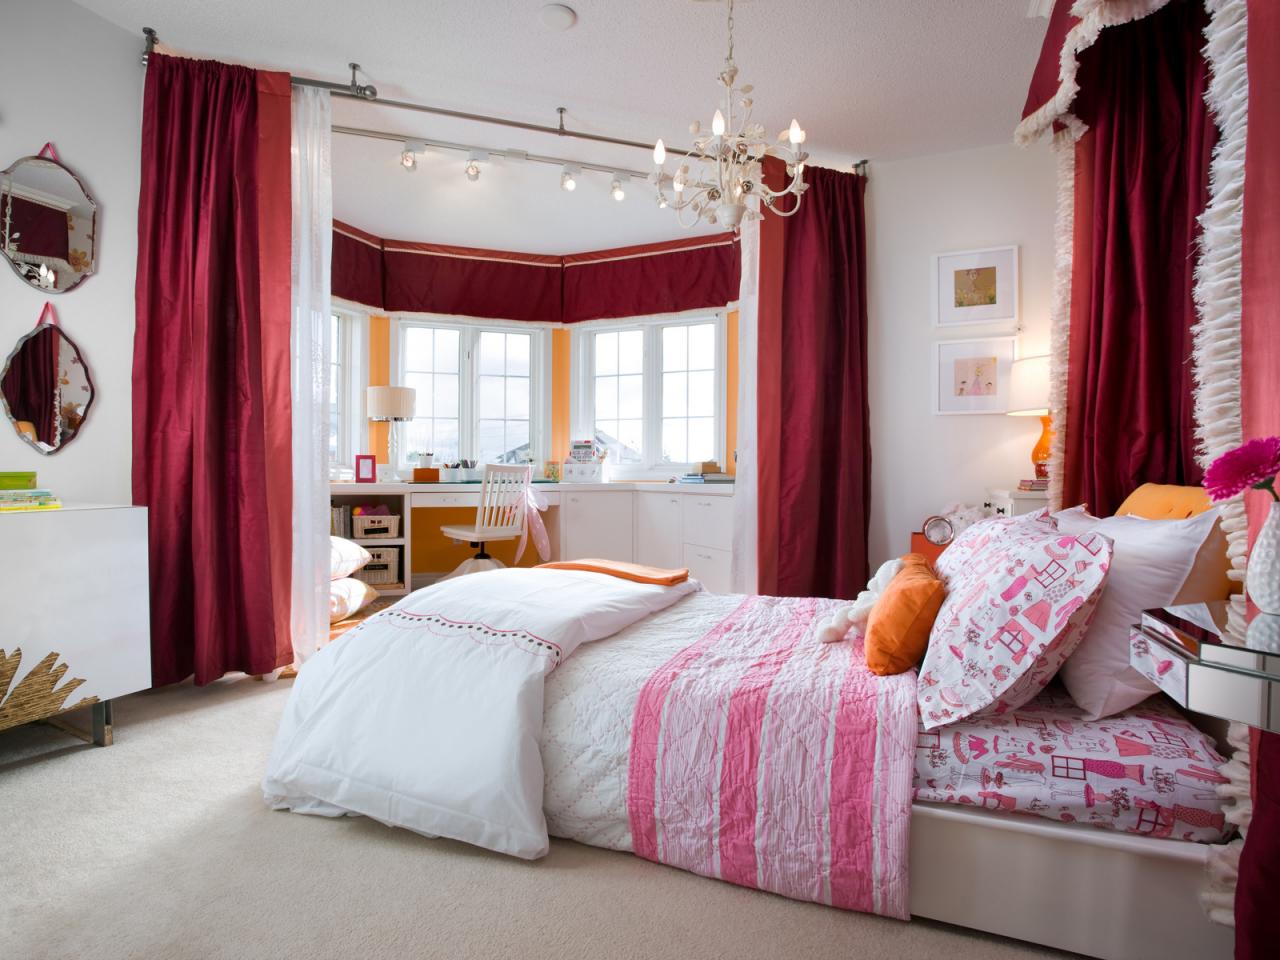 50 Bedroom Decorating Ideas For Teen Girls HGTV